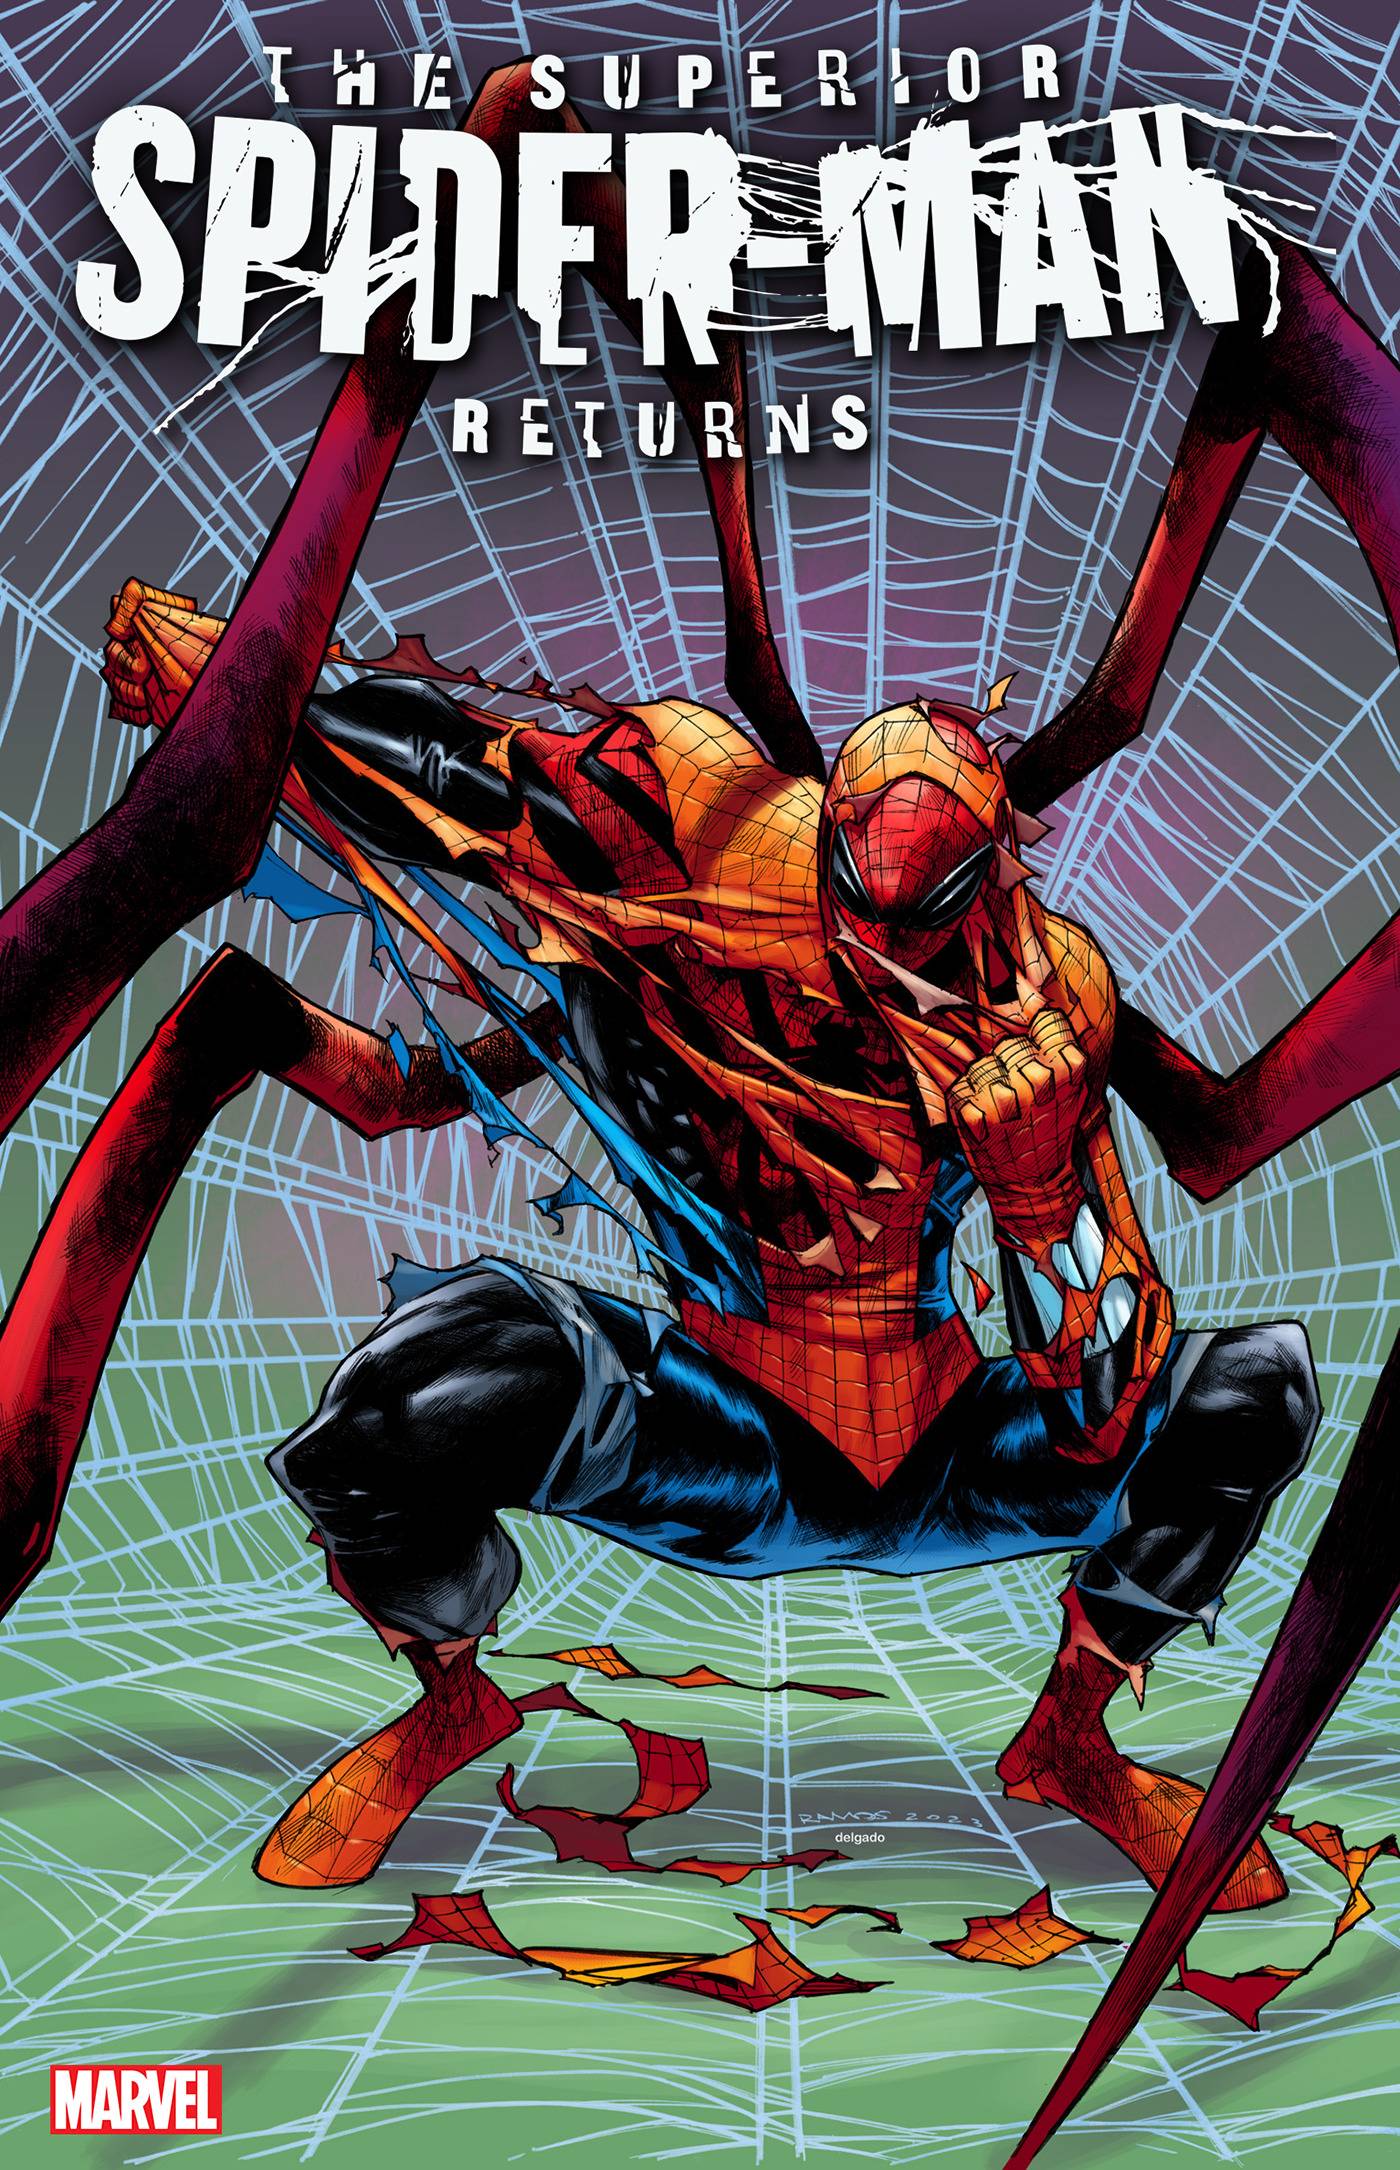 Superior spider-man returns #1